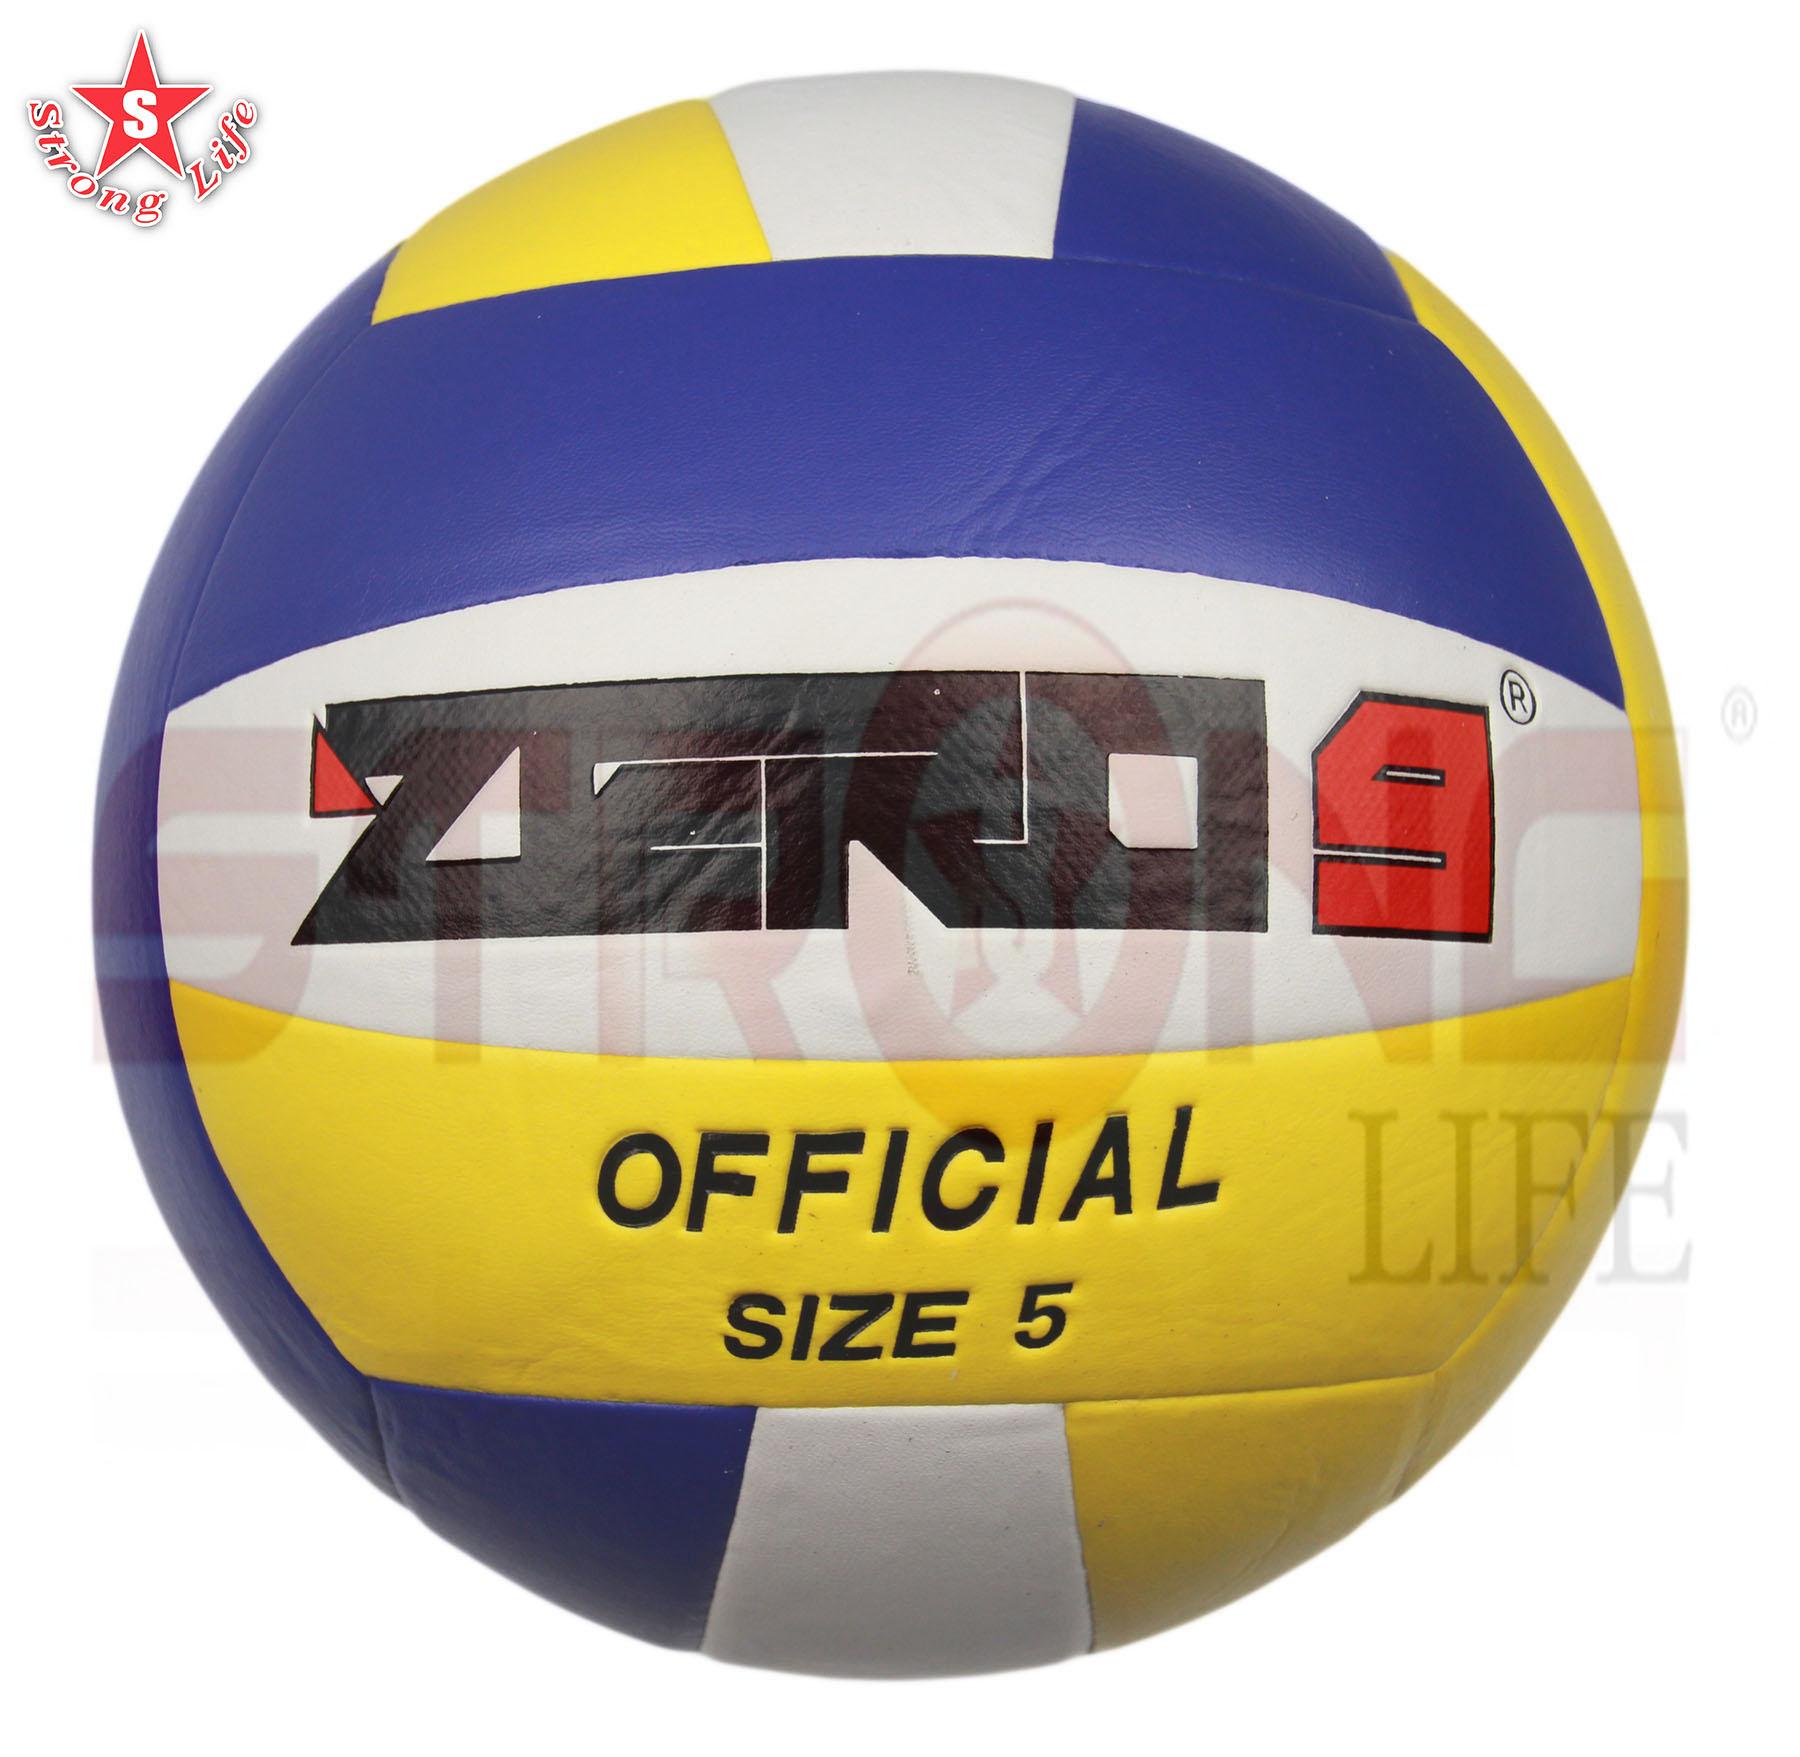 SKA ลูกวอลเล่ย์บอล ZERO 9 OFFICIAL  เบอร์ 5